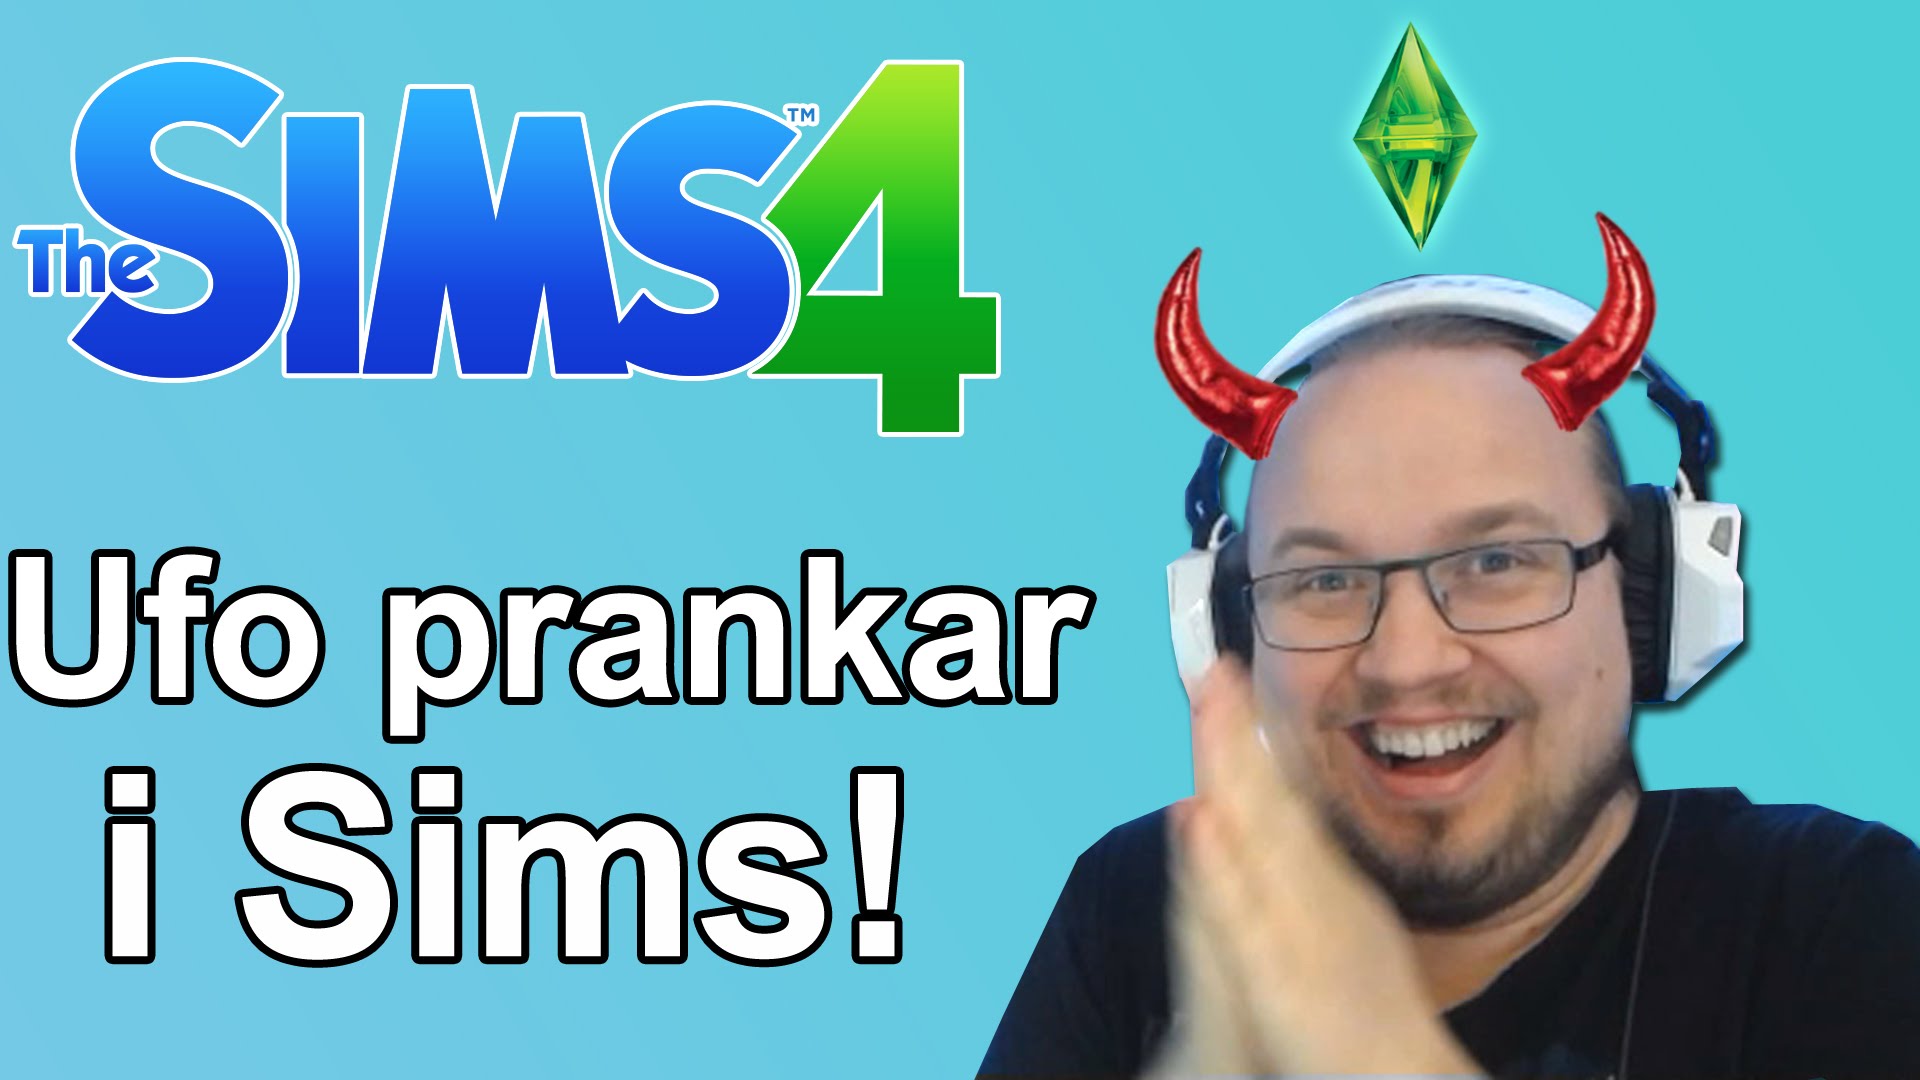 The Sims 4 – Ufo prankar i sims!